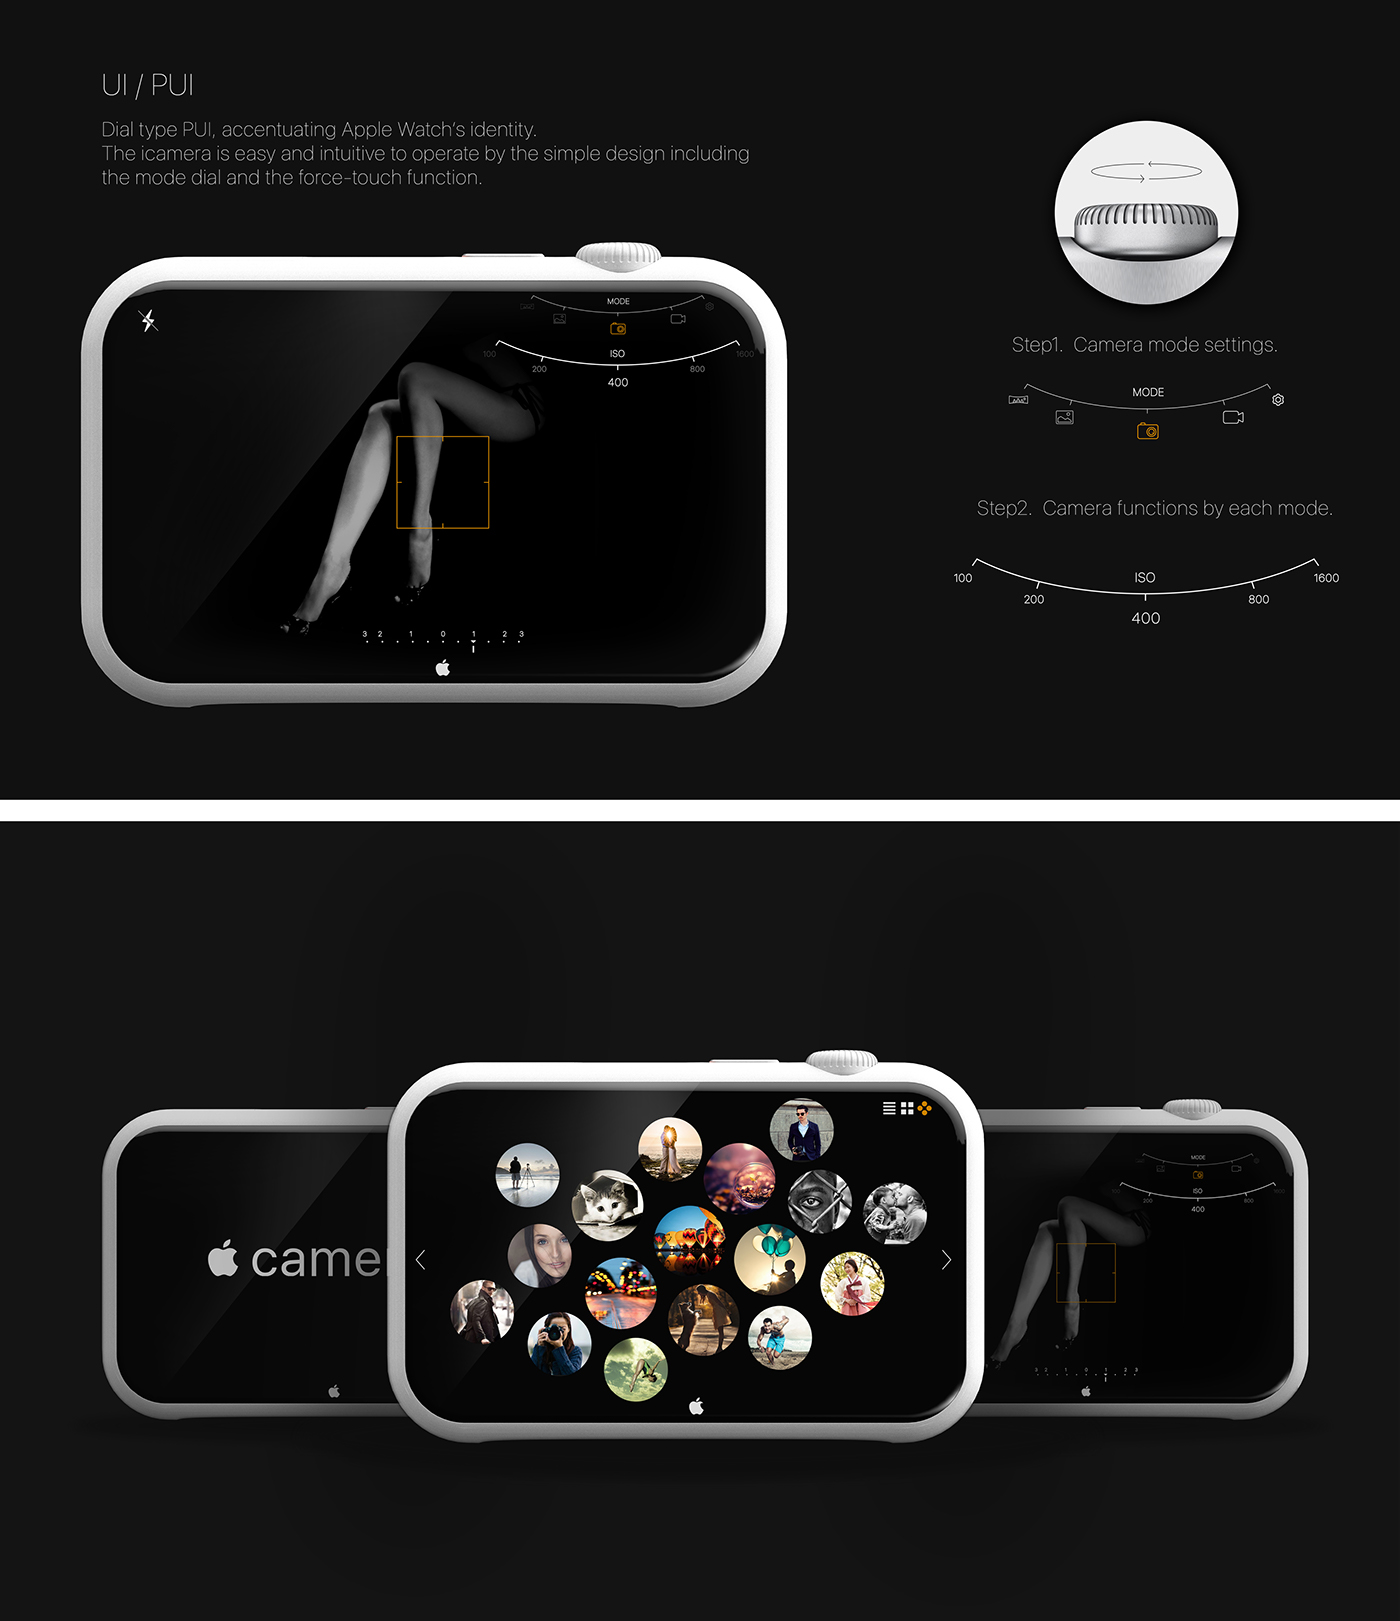 camera apple icamera product design concept iphone